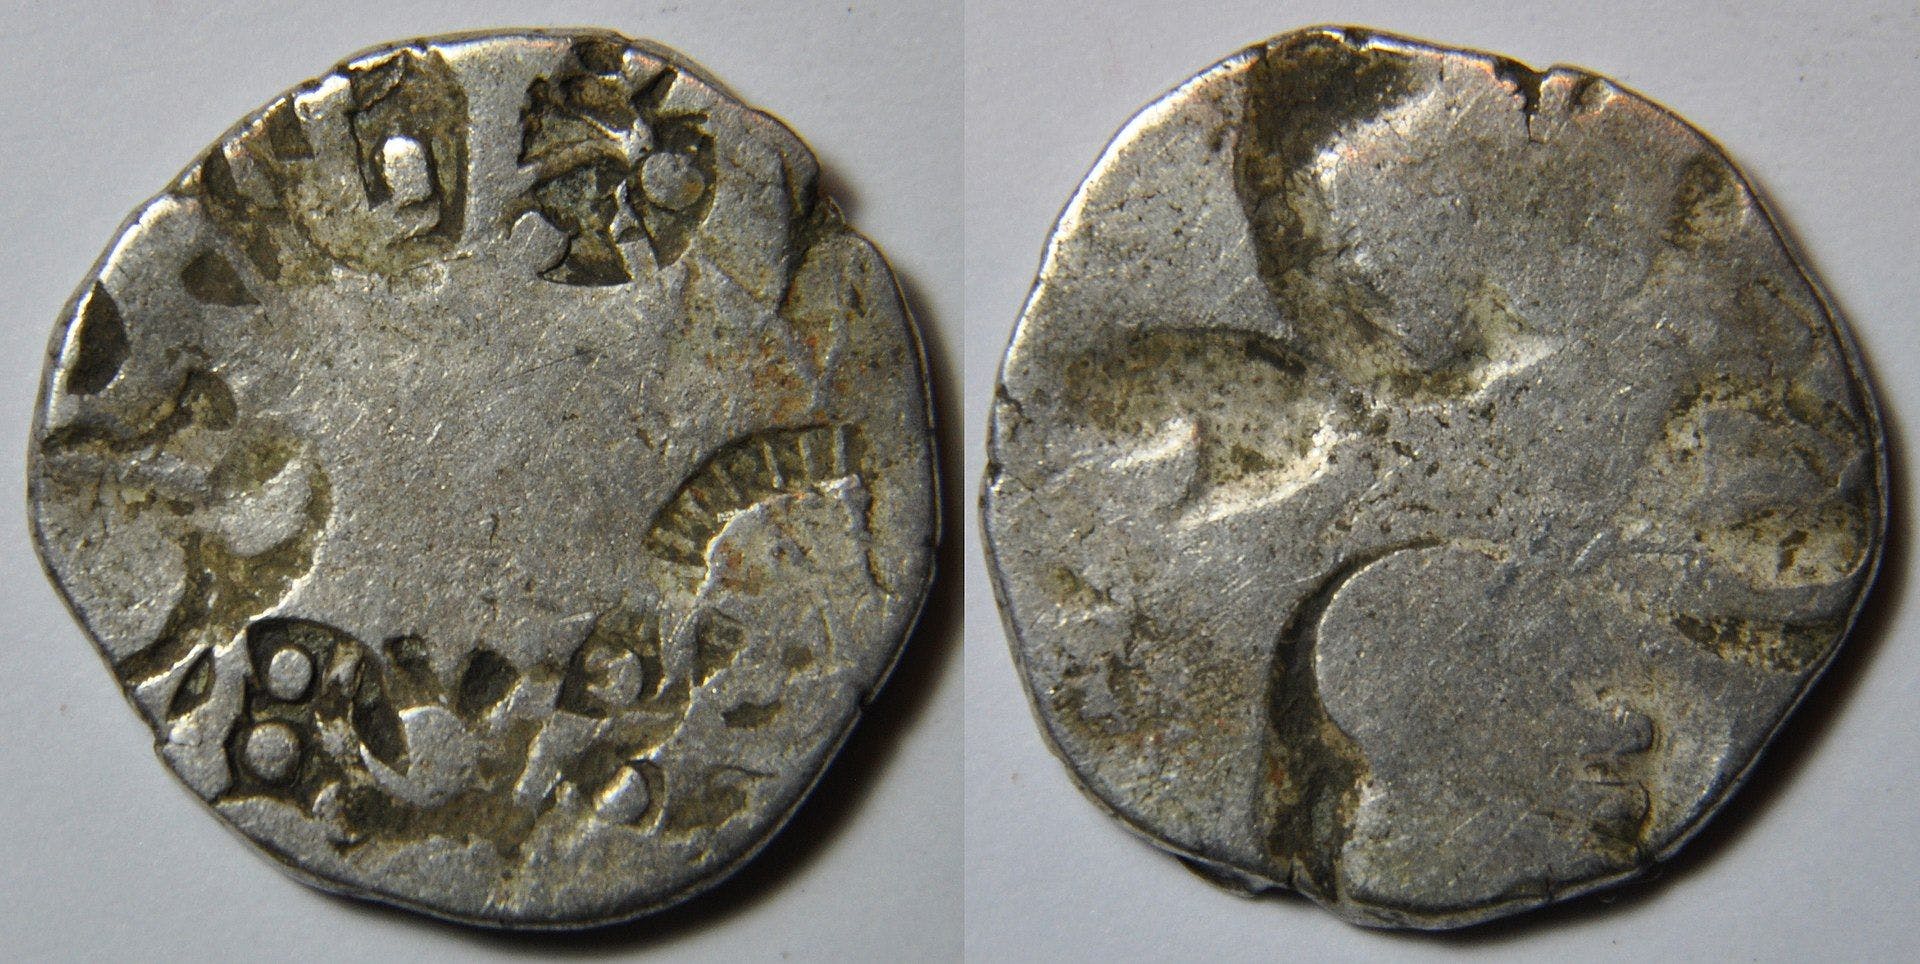 Silver punched marked coin from the Nanda Empire (possibly belonging to Mahapadma Nanda)